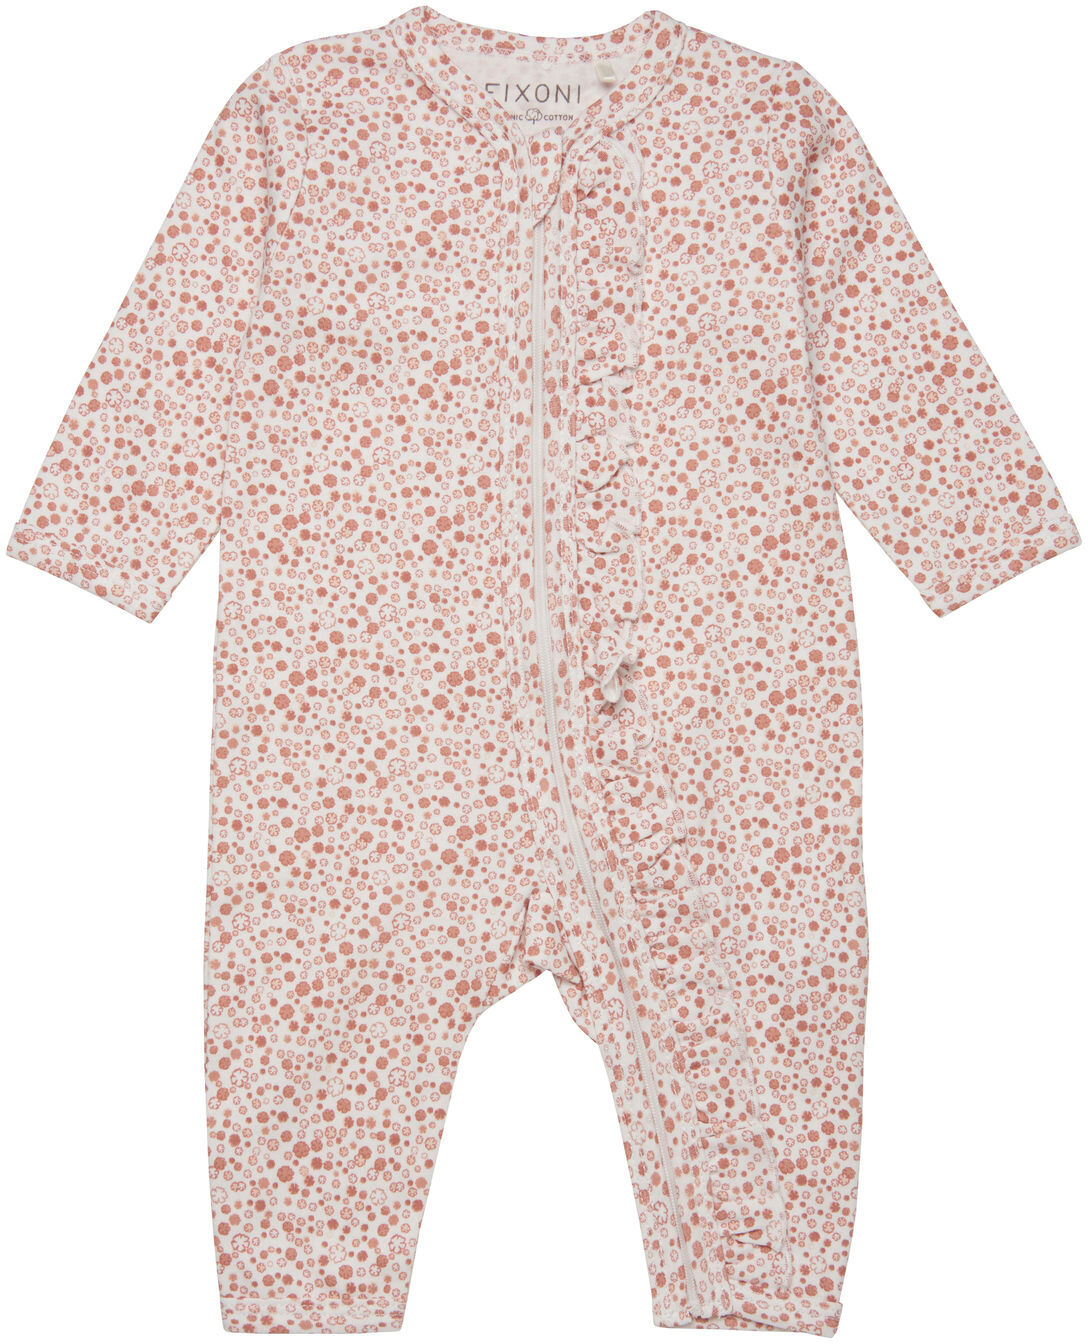 Fixoni Pyjamas Peach Beige 68